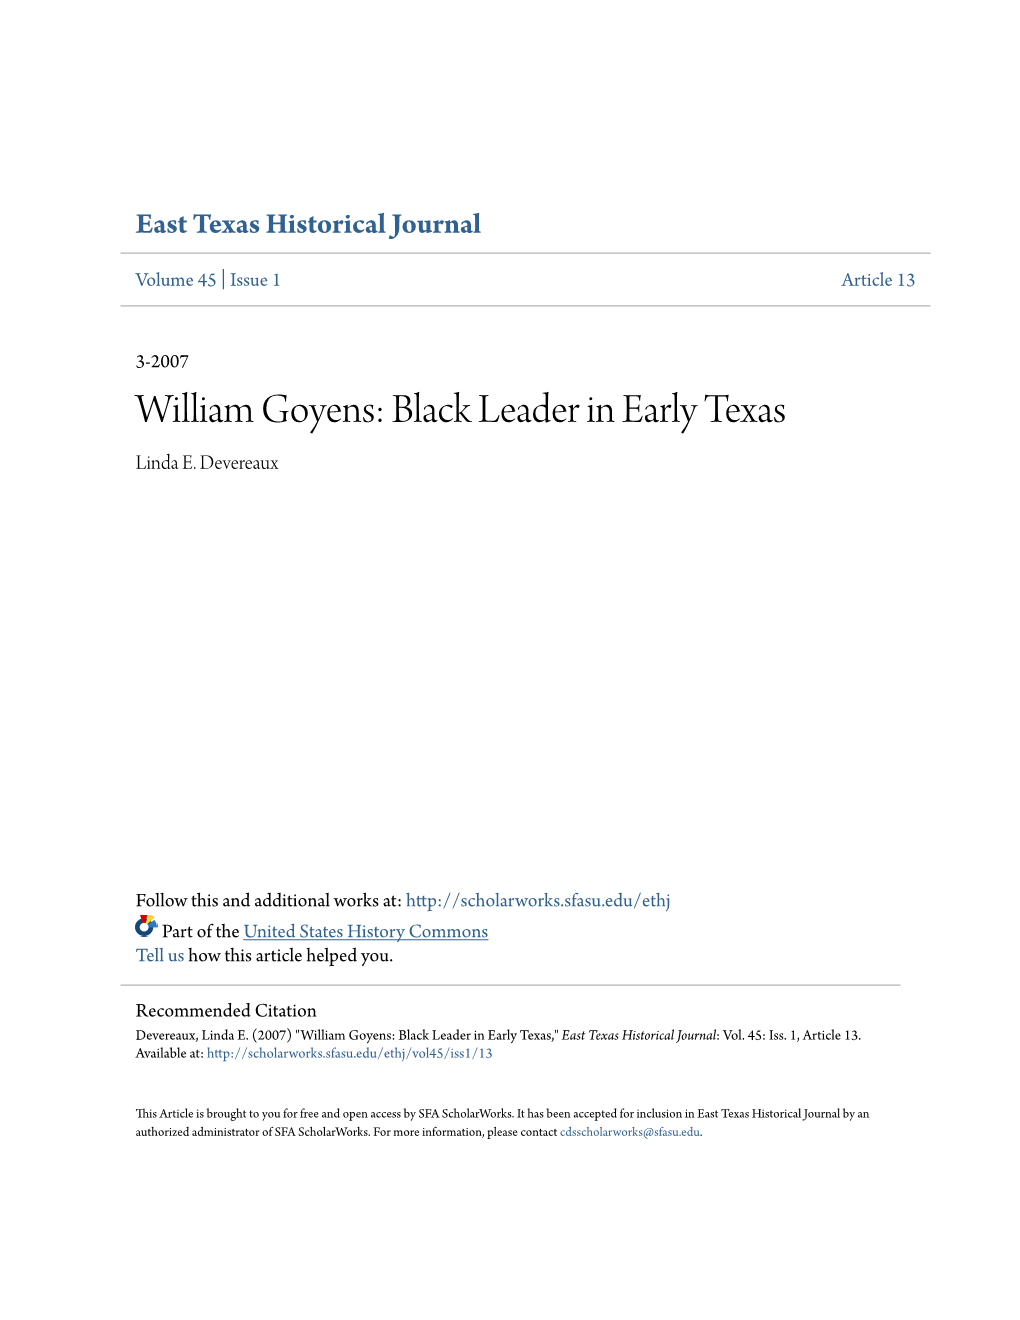 William Goyens: Black Leader in Early Texas Linda E